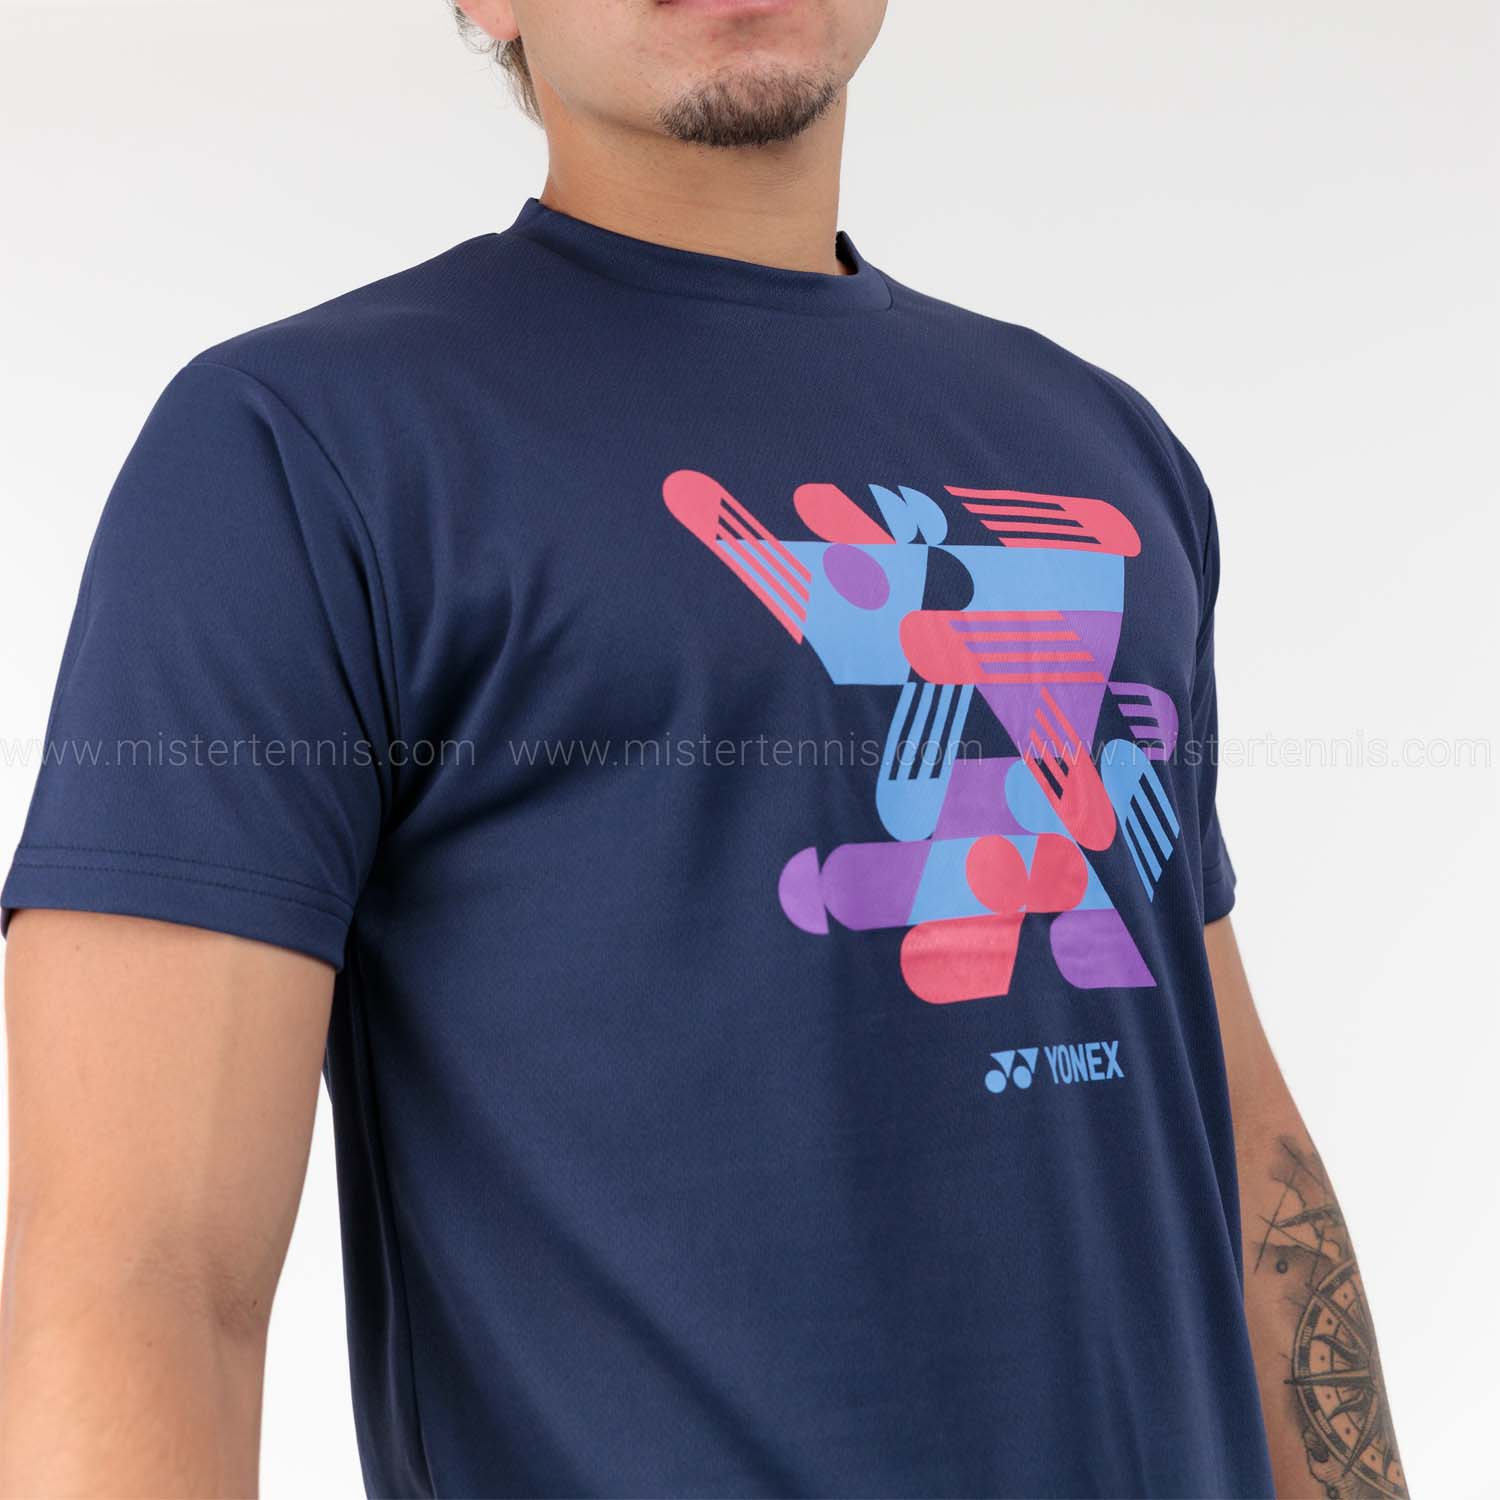 Yonex Practice Court T-Shirt - Indigo Marine